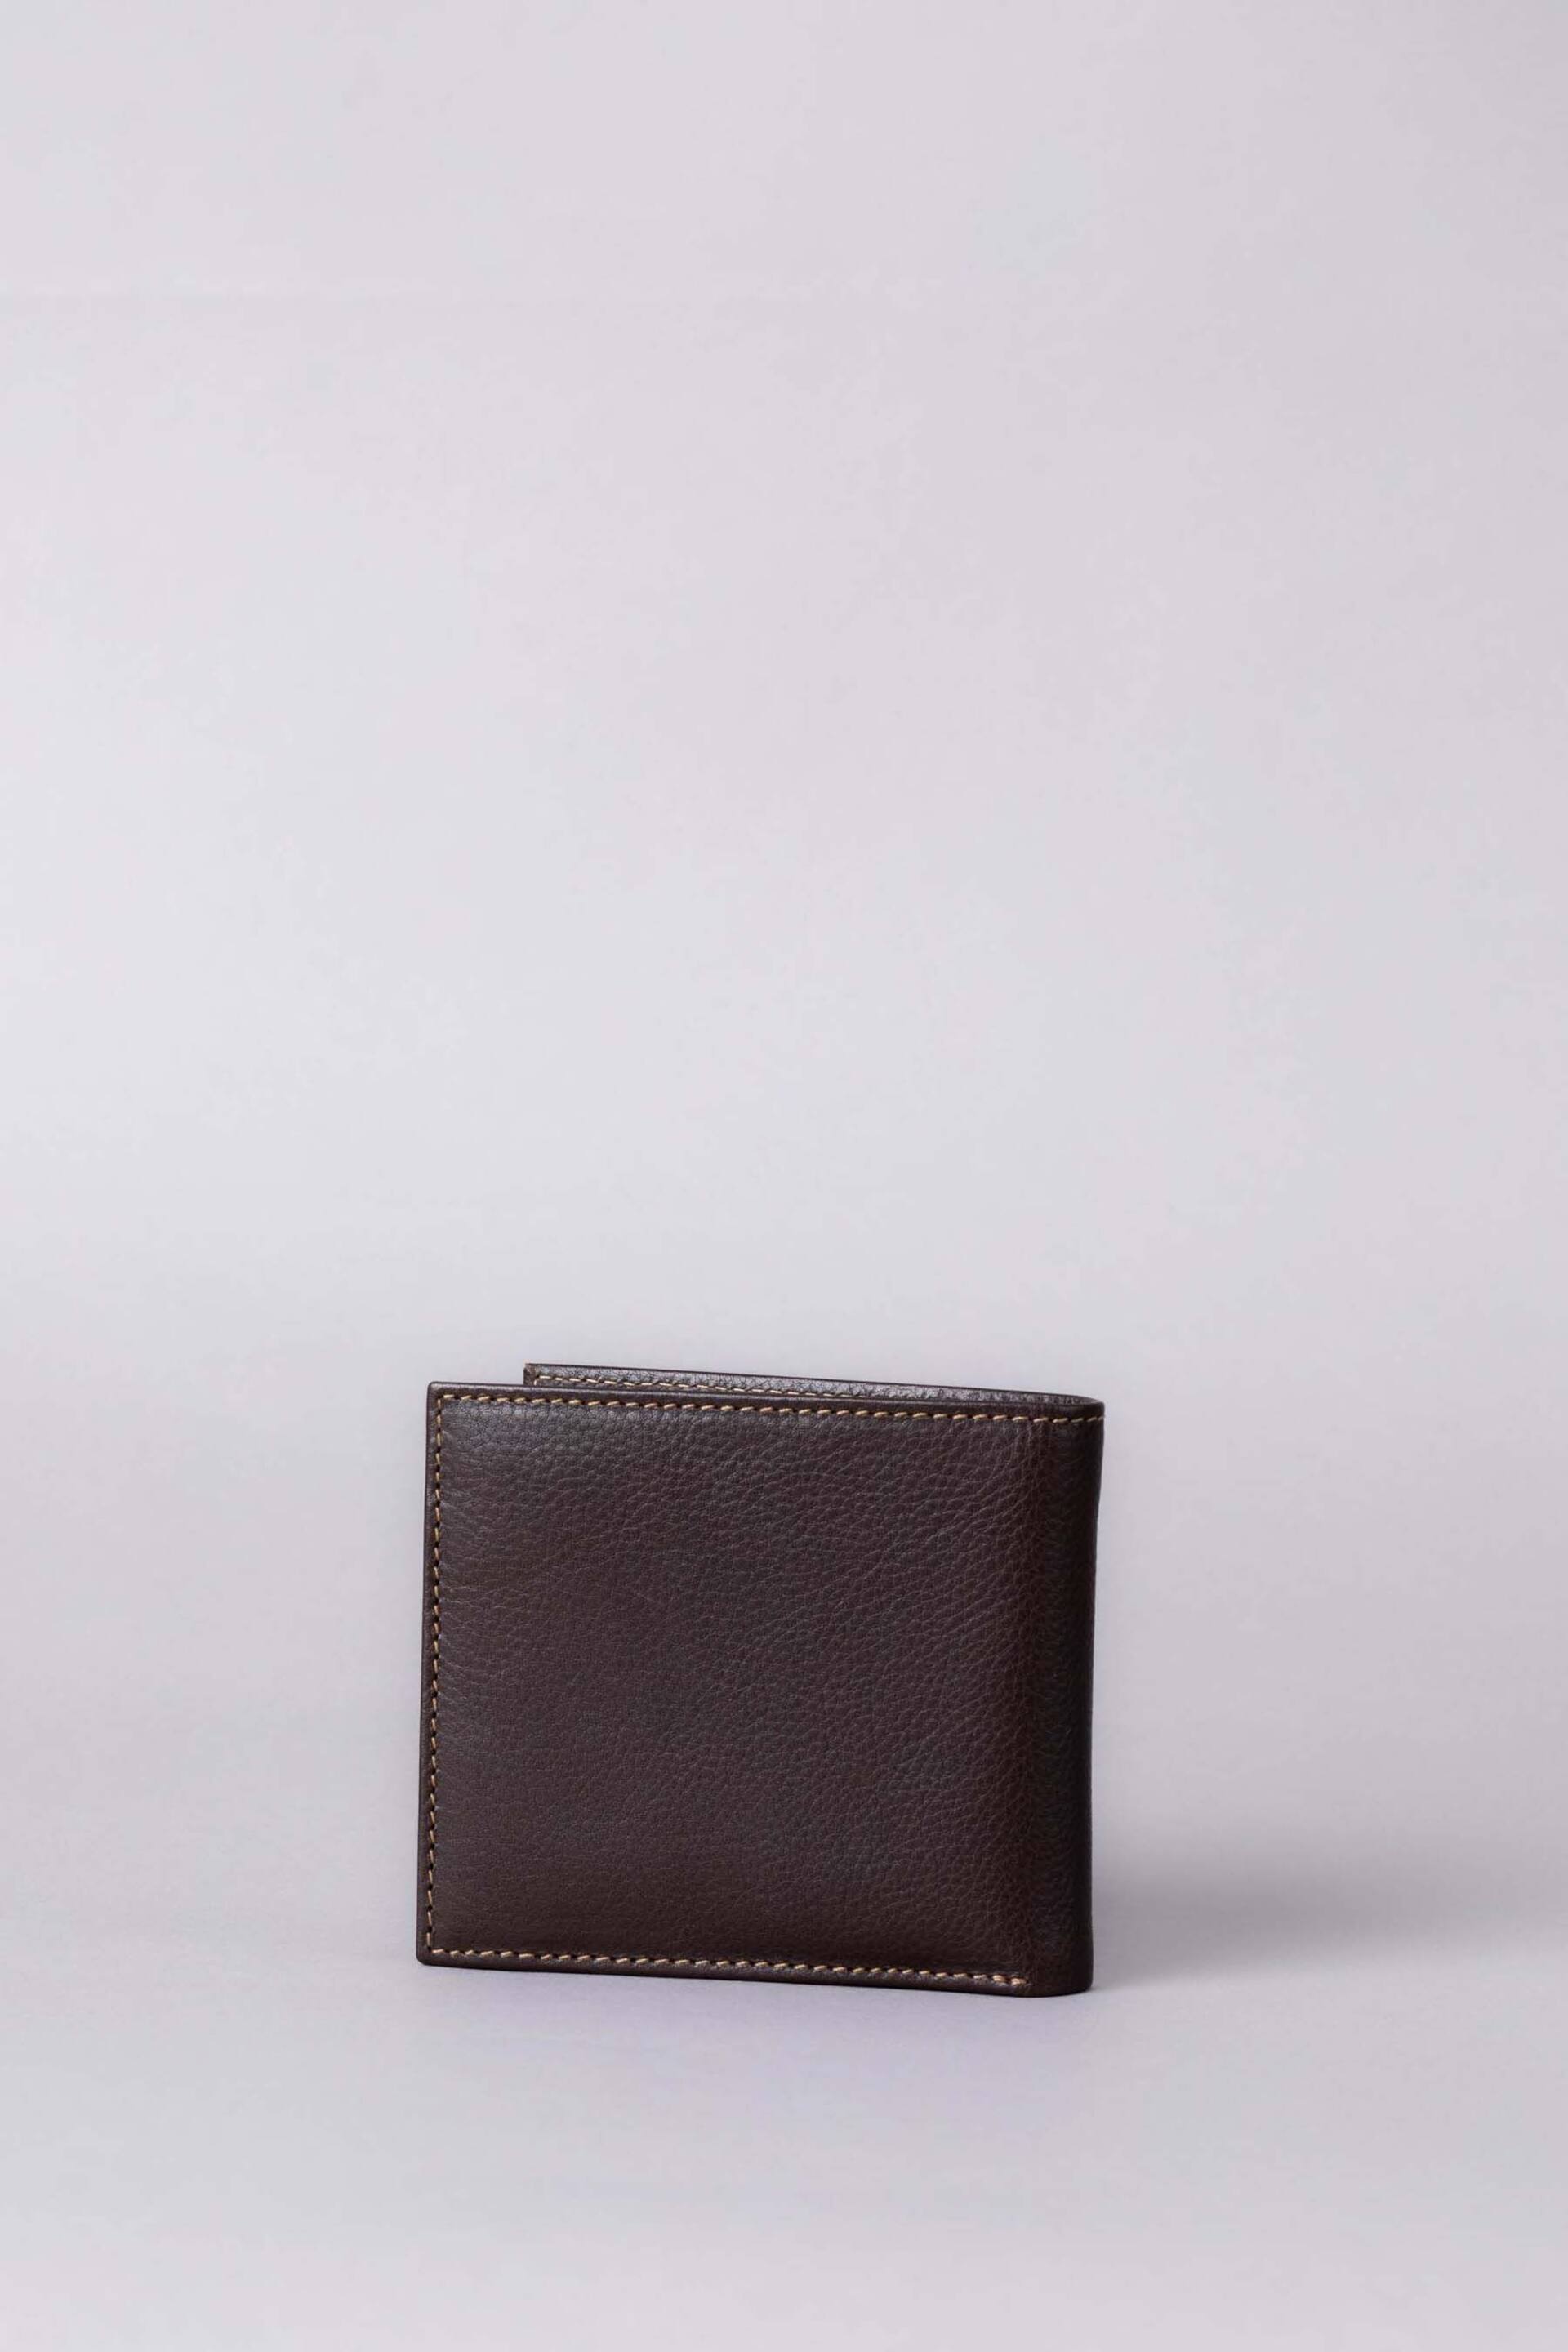 Lakeland Leather Kelsick Leather Brown Wallet - Image 3 of 7